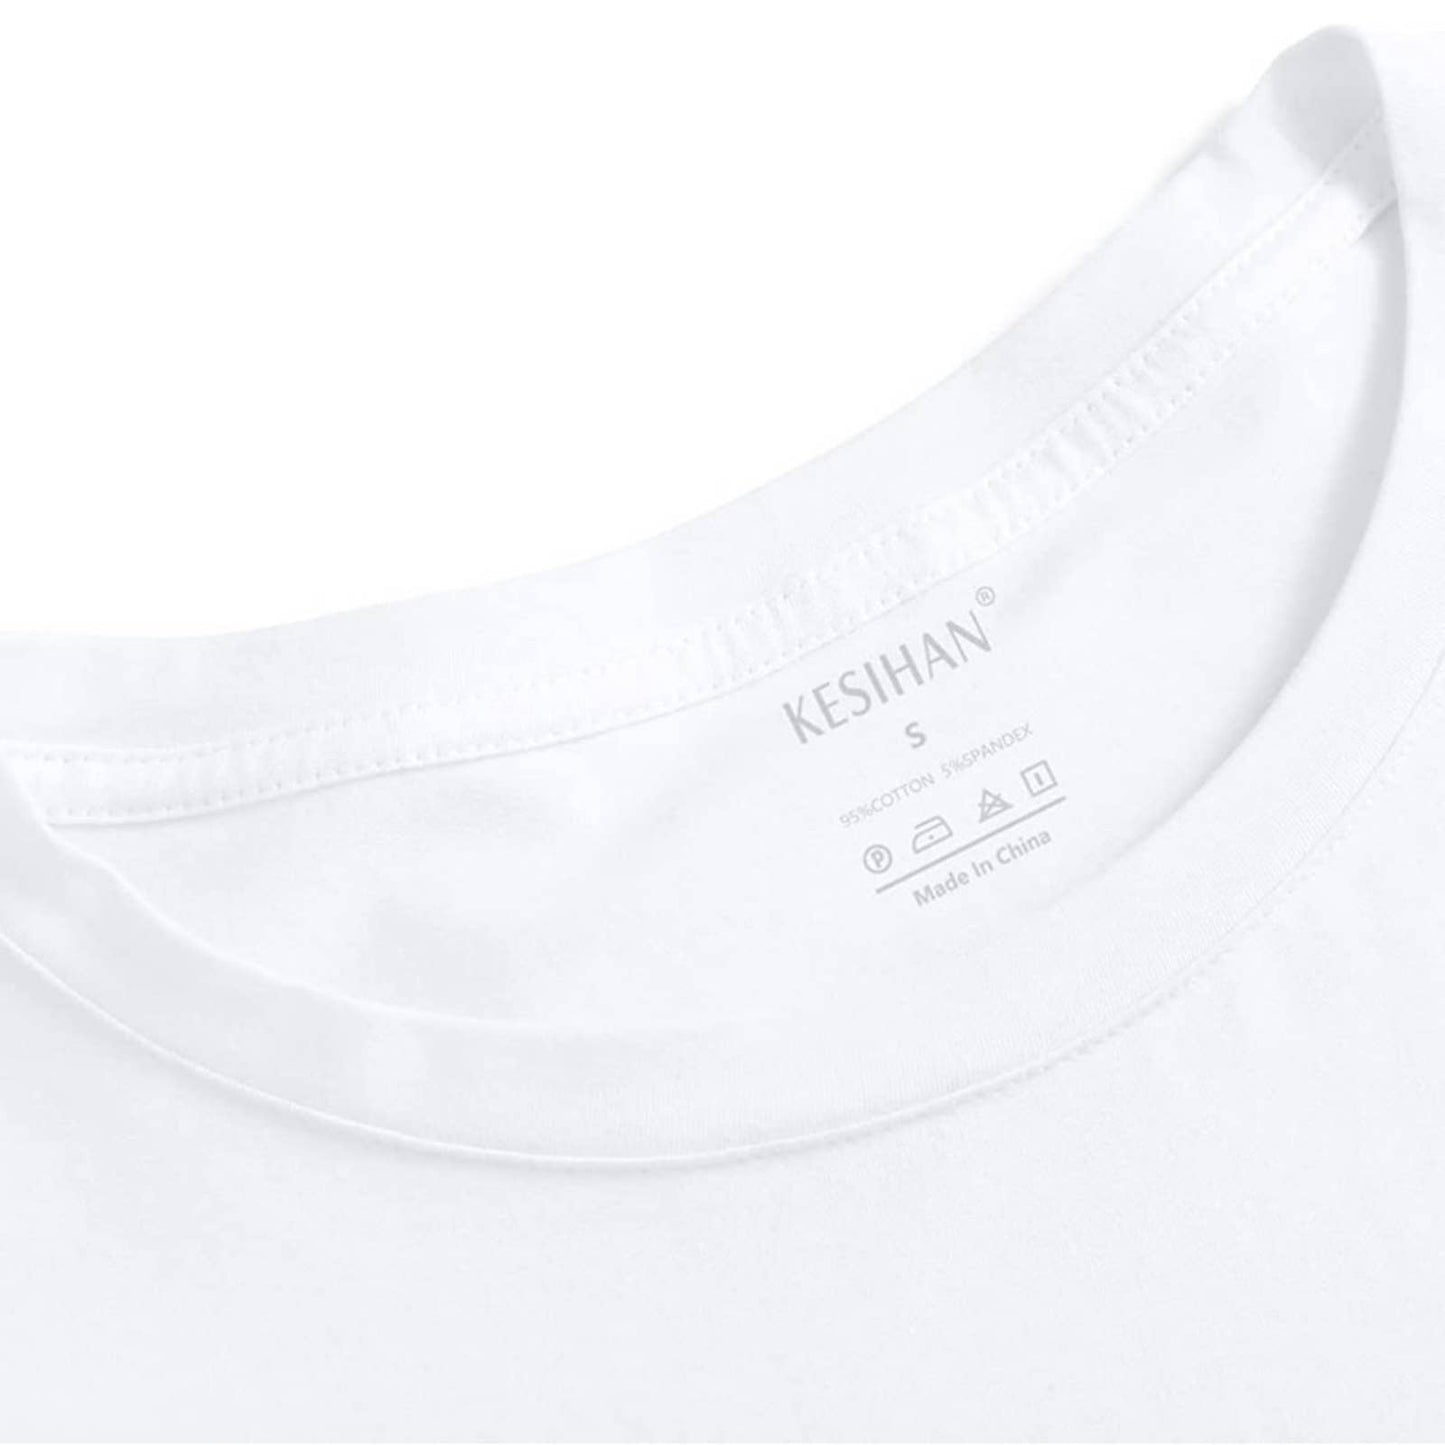 KESIHAN Men's Casual Cotton Spandex Striped Crewneck T-Shirt 3XL